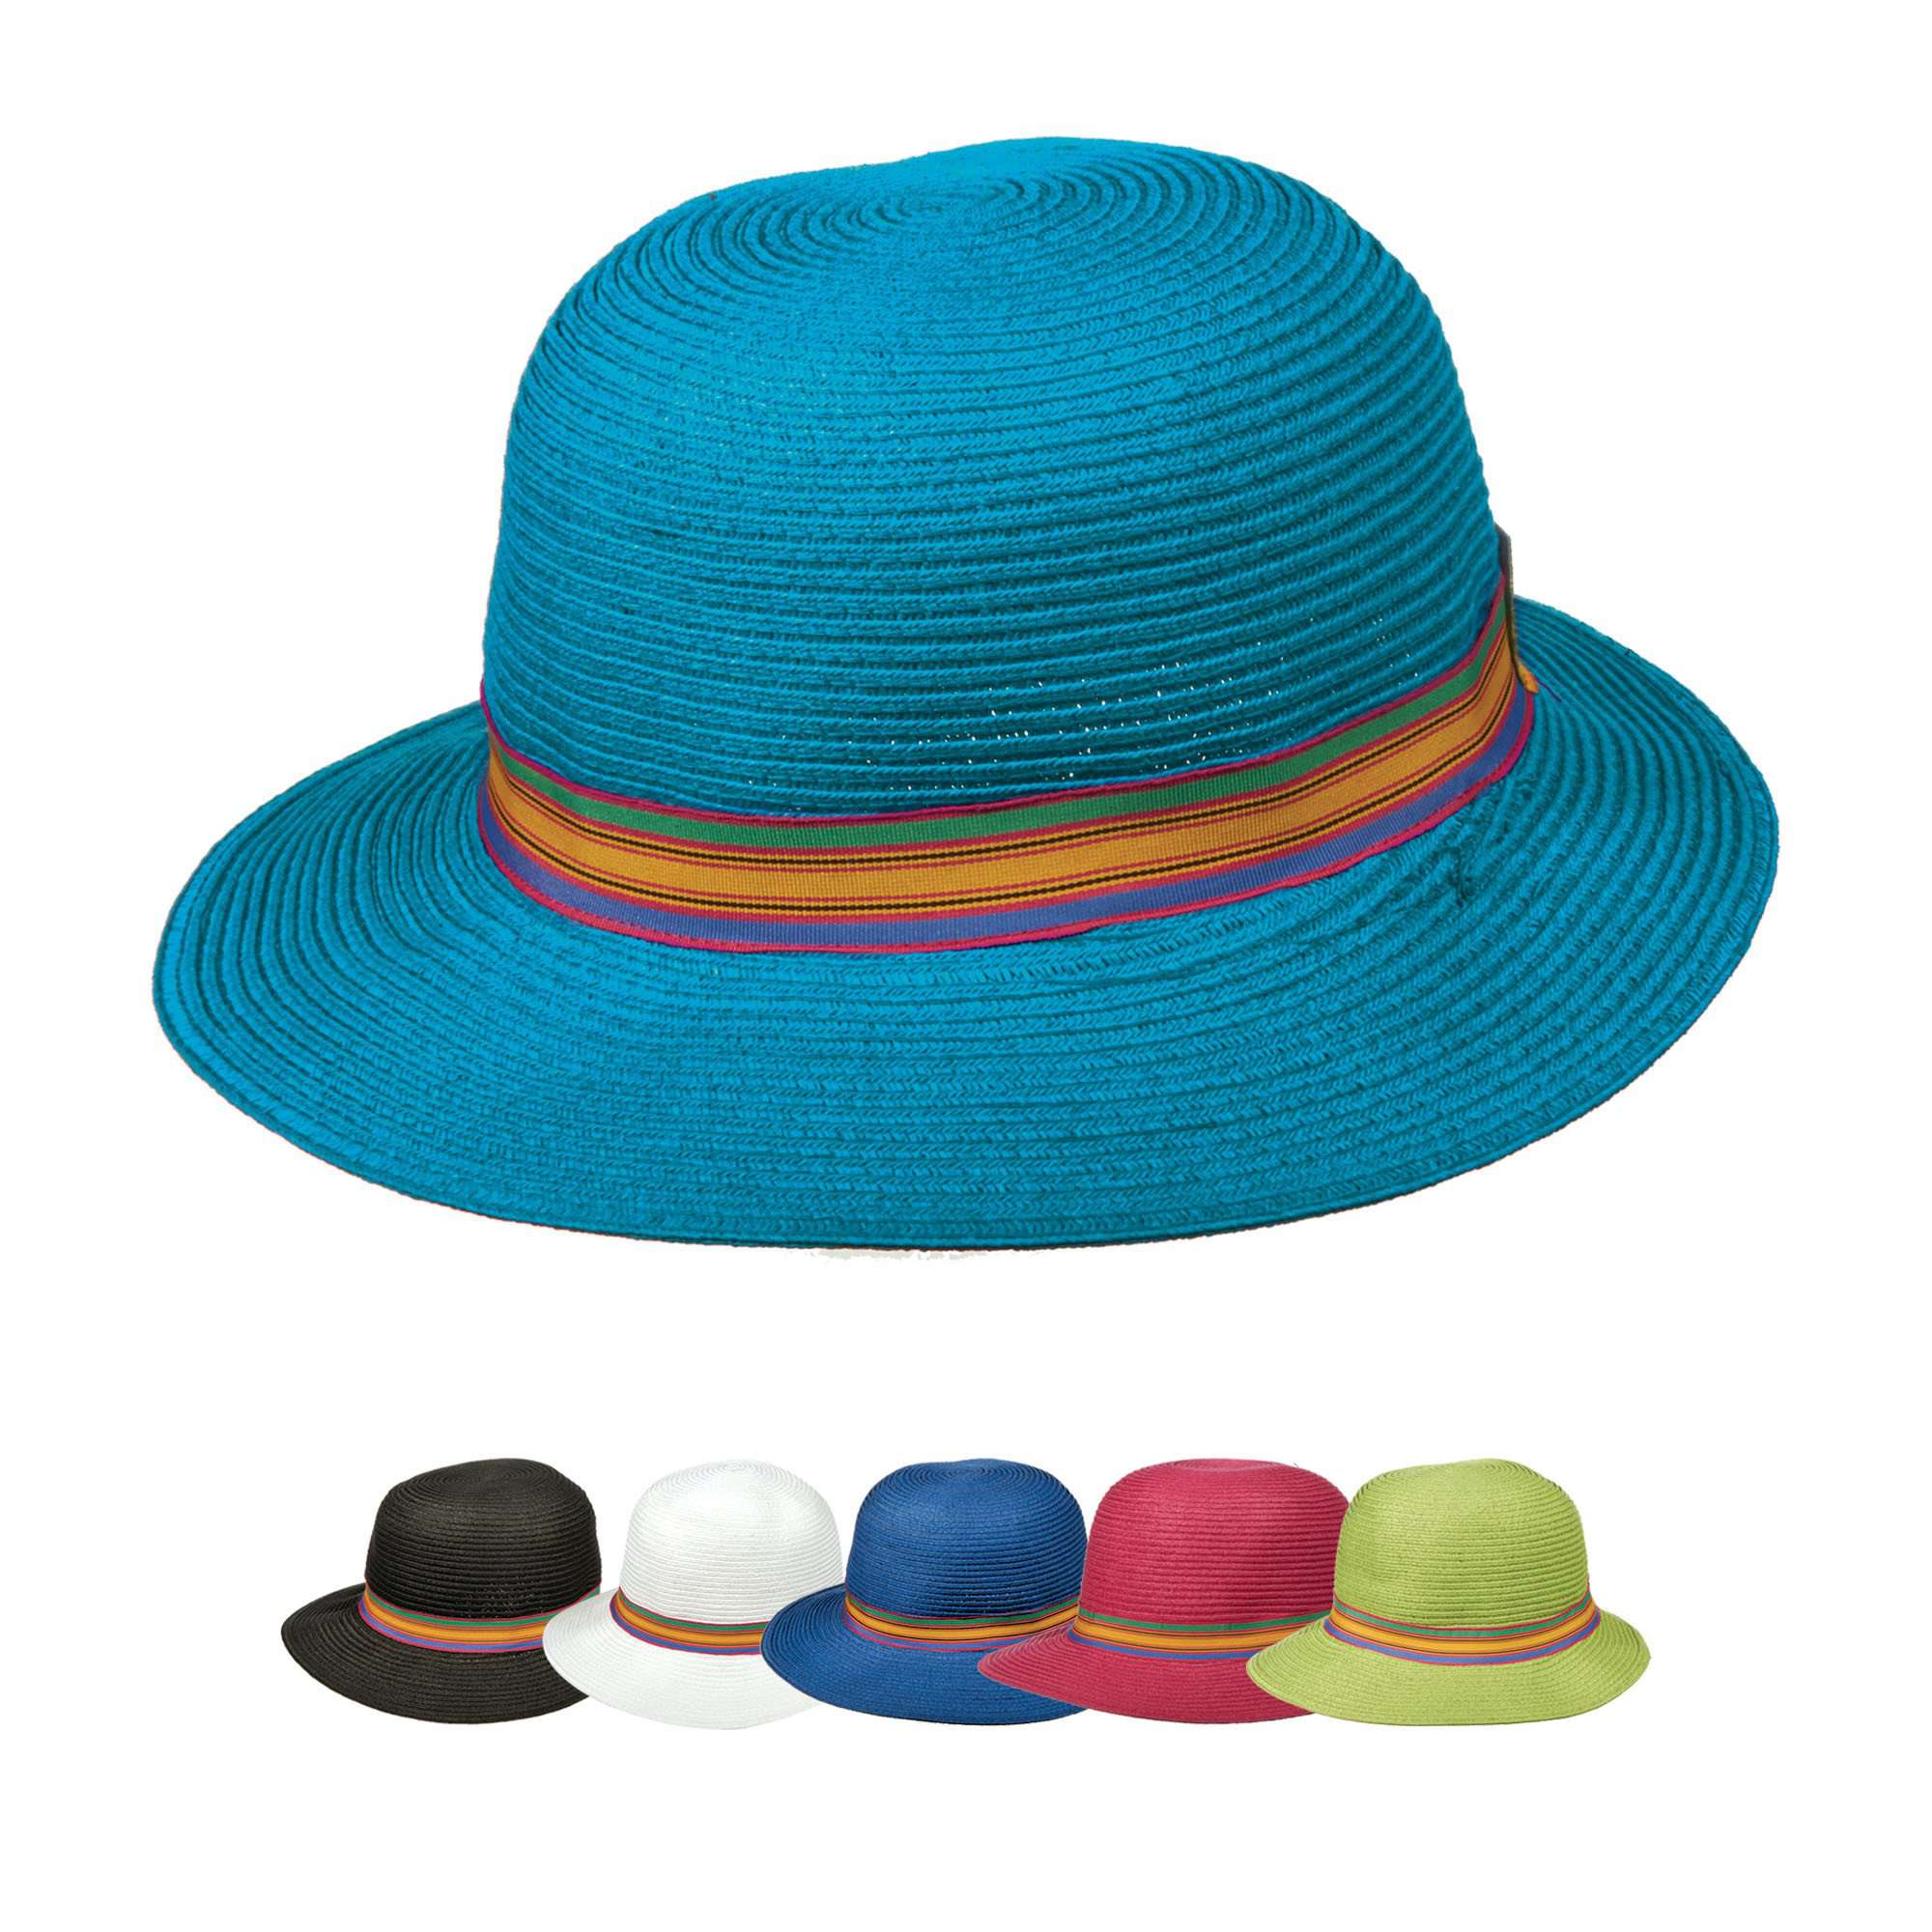 Tropical Trends Wavy Brim Cloche Cloche Dorfman Hat Co.    